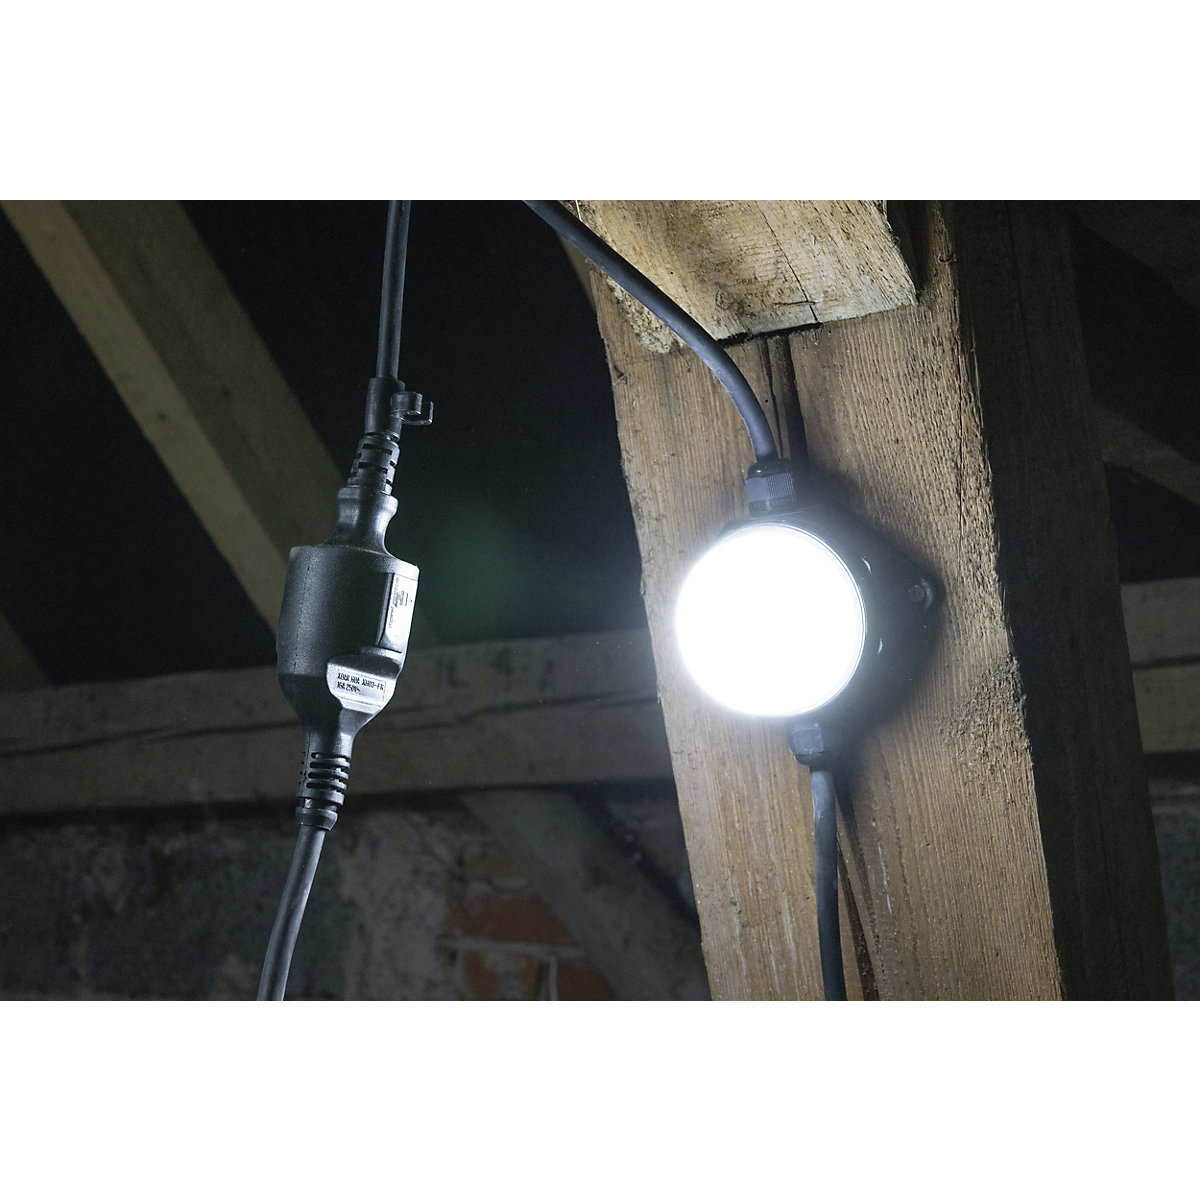 Light-Cord LC6000AC LED light chain – Ansmann (Product illustration 6)-5